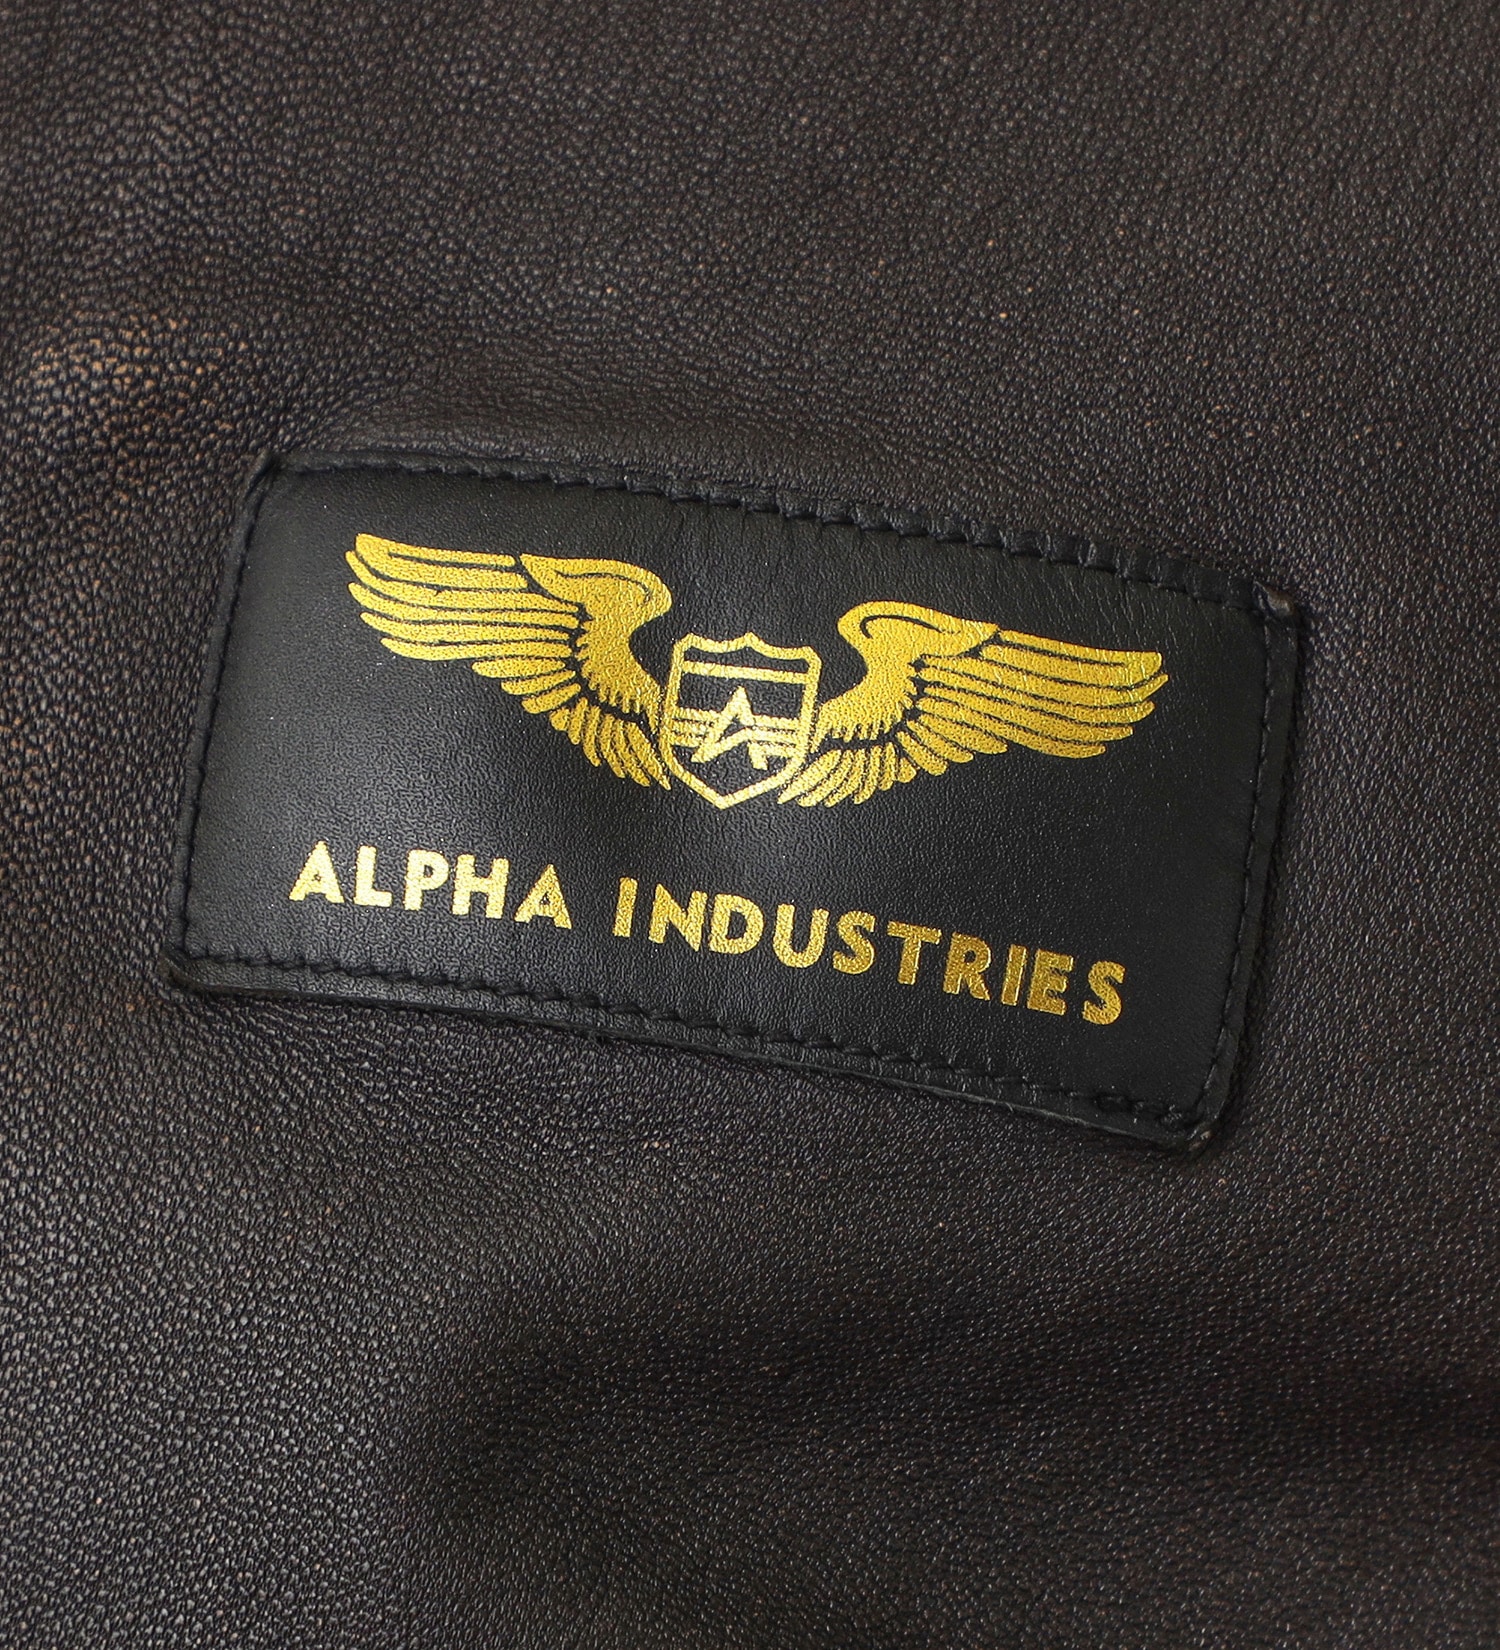 ALPHA(アルファ)のG-1ジャケット|ジャケット/アウター/ミリタリージャケット/メンズ|ブラウン